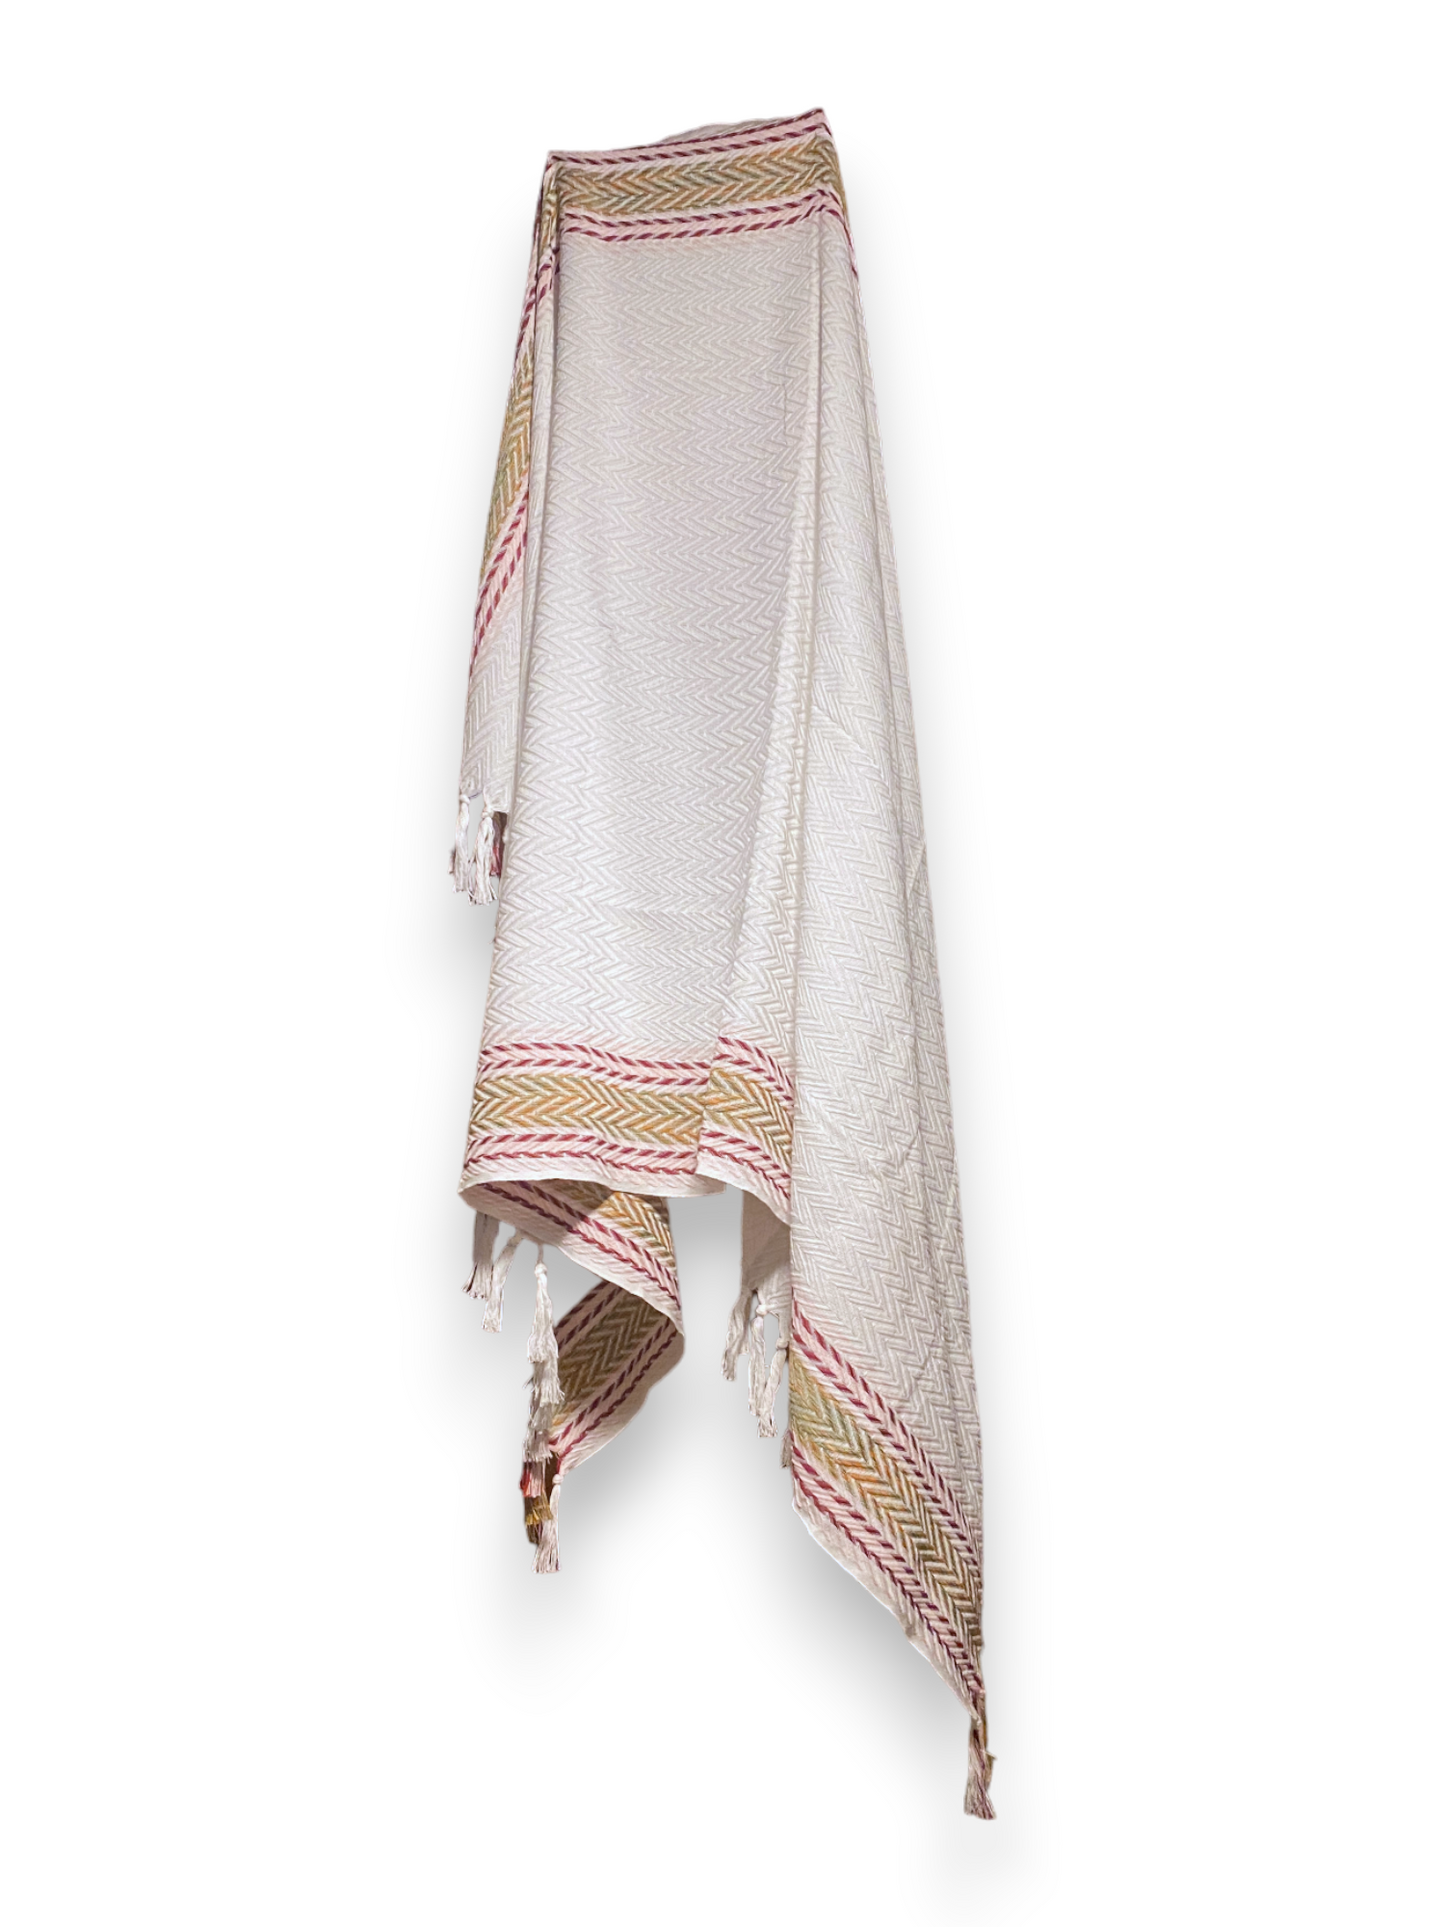 Hammam Towel (100% Cotton)